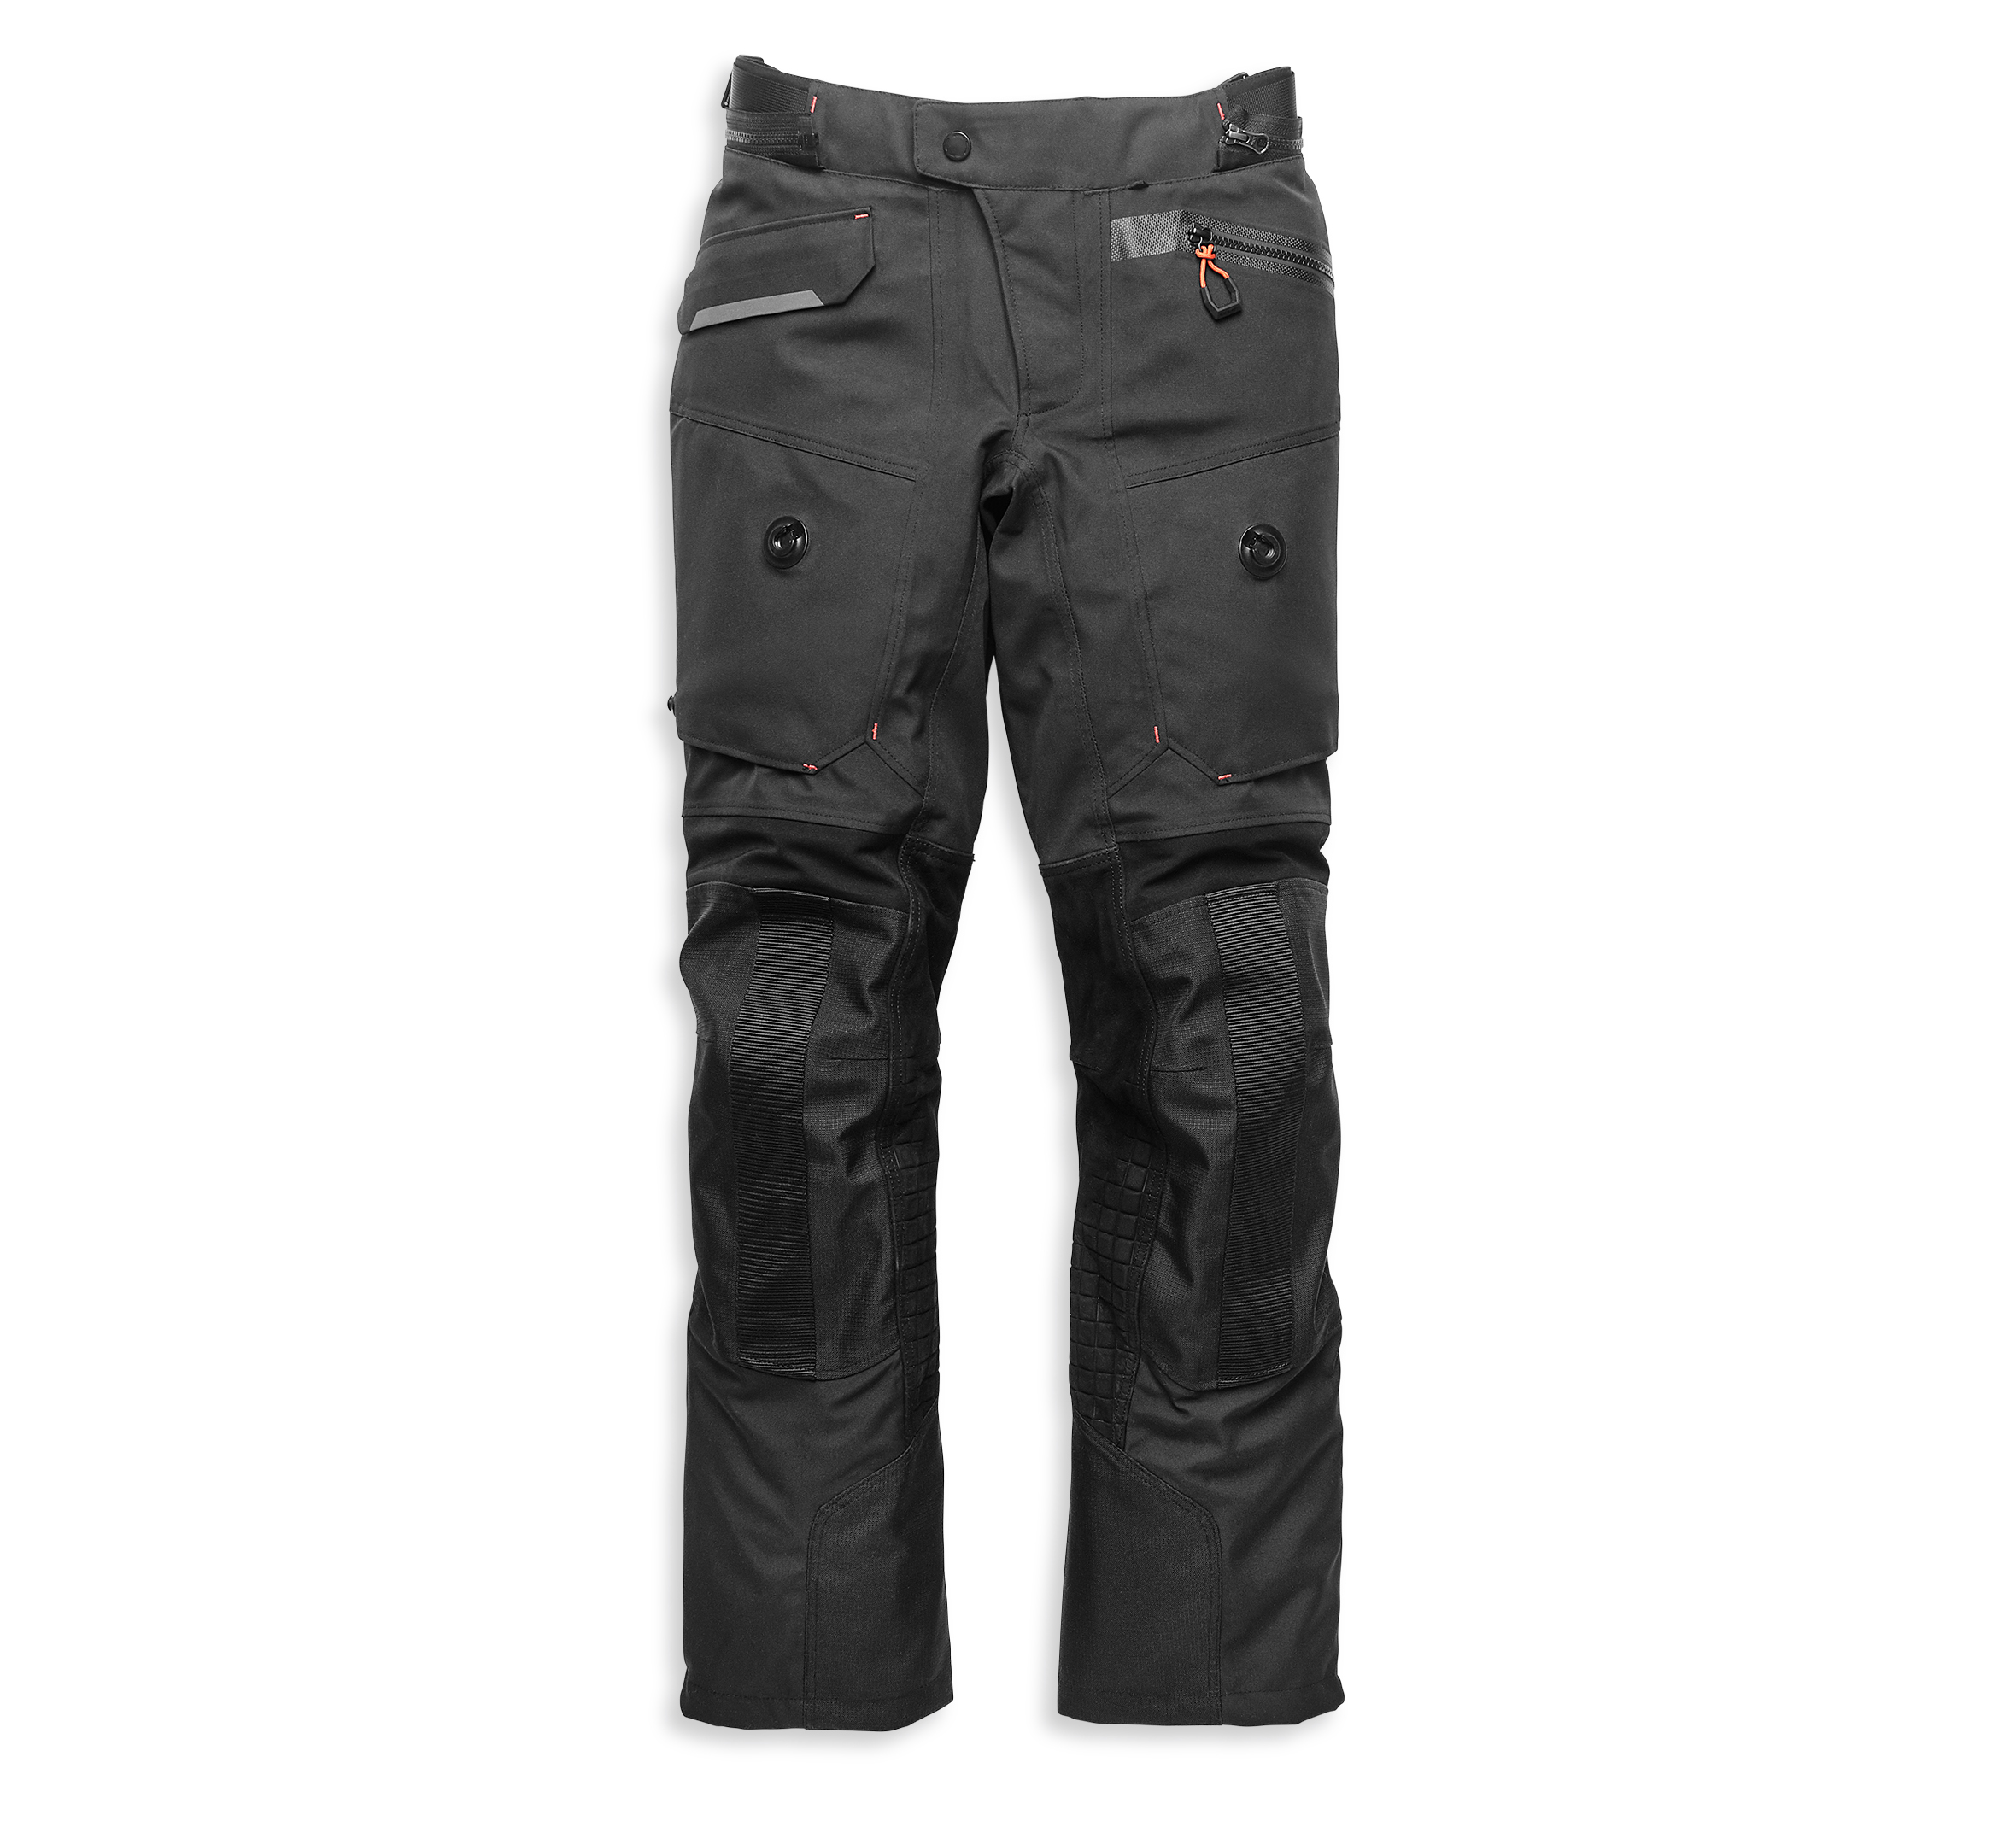 Harley Davidson Leather Pants Size 14 Black Leather Pants L Large -   Australia